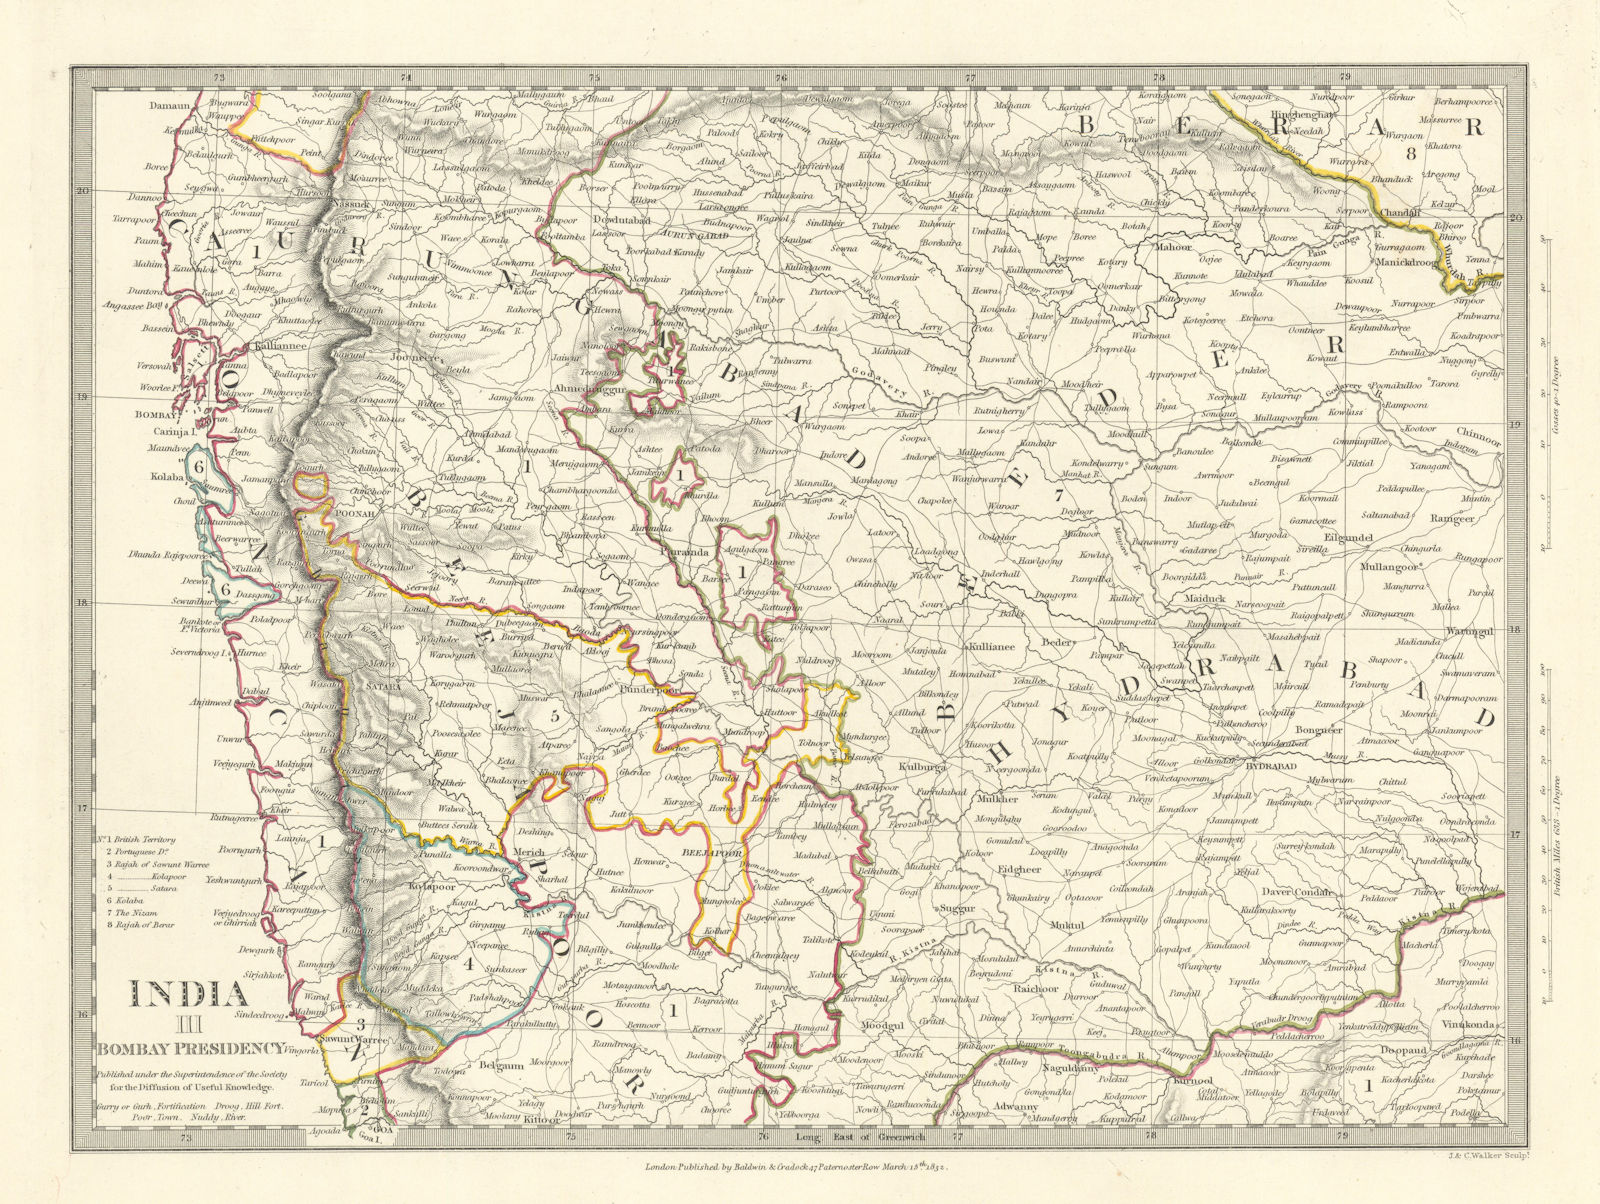 BOMBAY (MUMBAI) PRESIDENCY AND HYDERABAD. Aurangabad; Bijapur. SDUK 1844 map